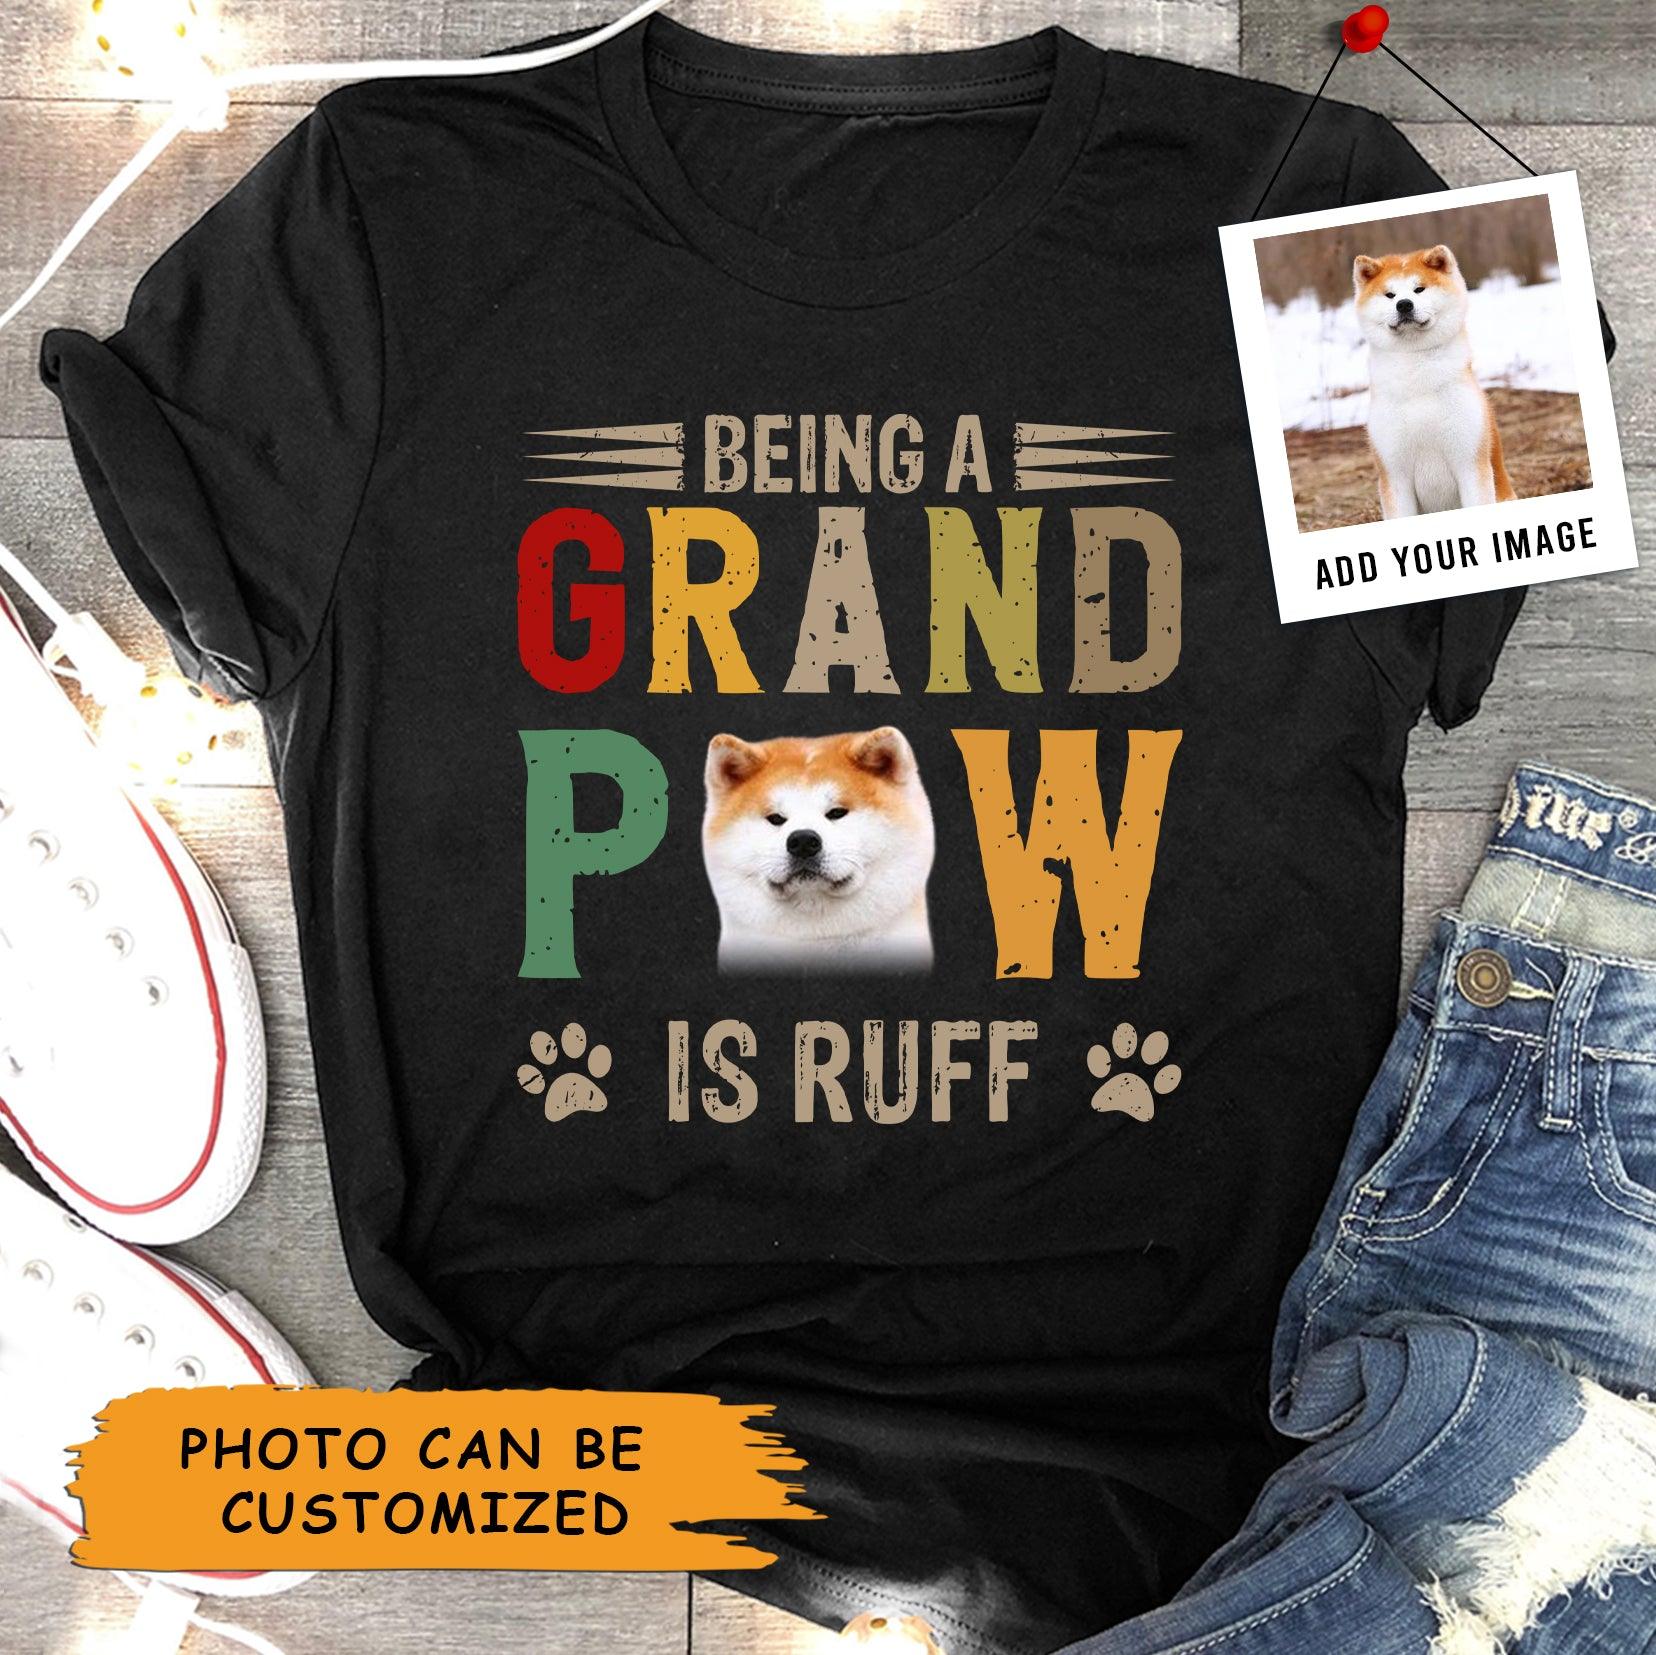 Akita Inu Unisex T Shirt Custom - Customize Photo Being A Grand Paw Is Ruff Personalized Unisex T Shirt - Gift For Dog Lovers, Friend, Family - Amzanimalsgift